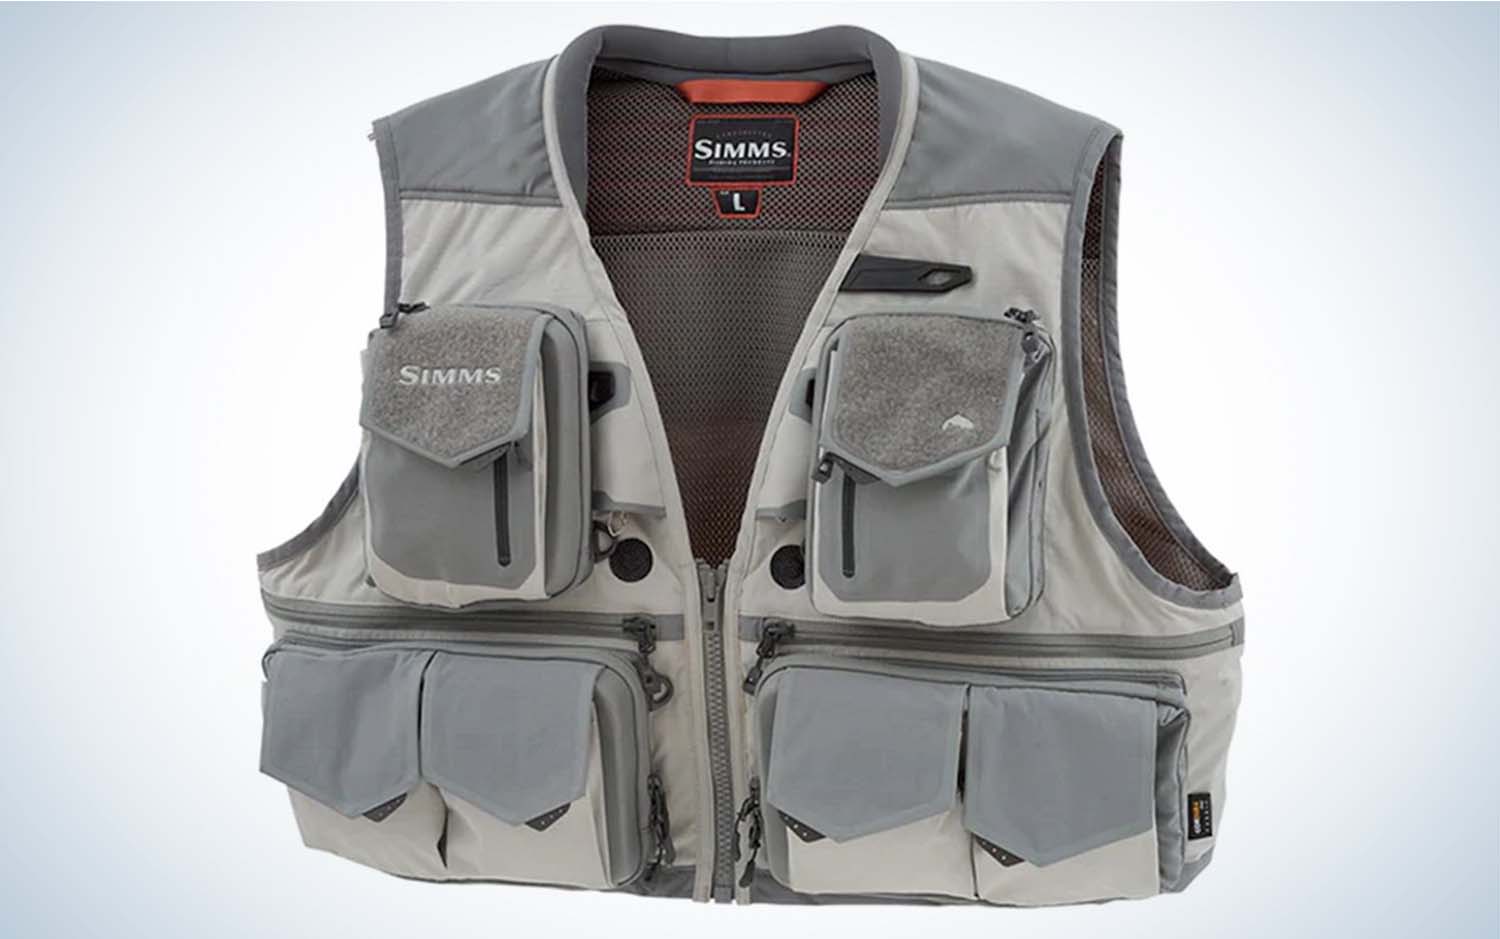 A grey best fly fishing vest